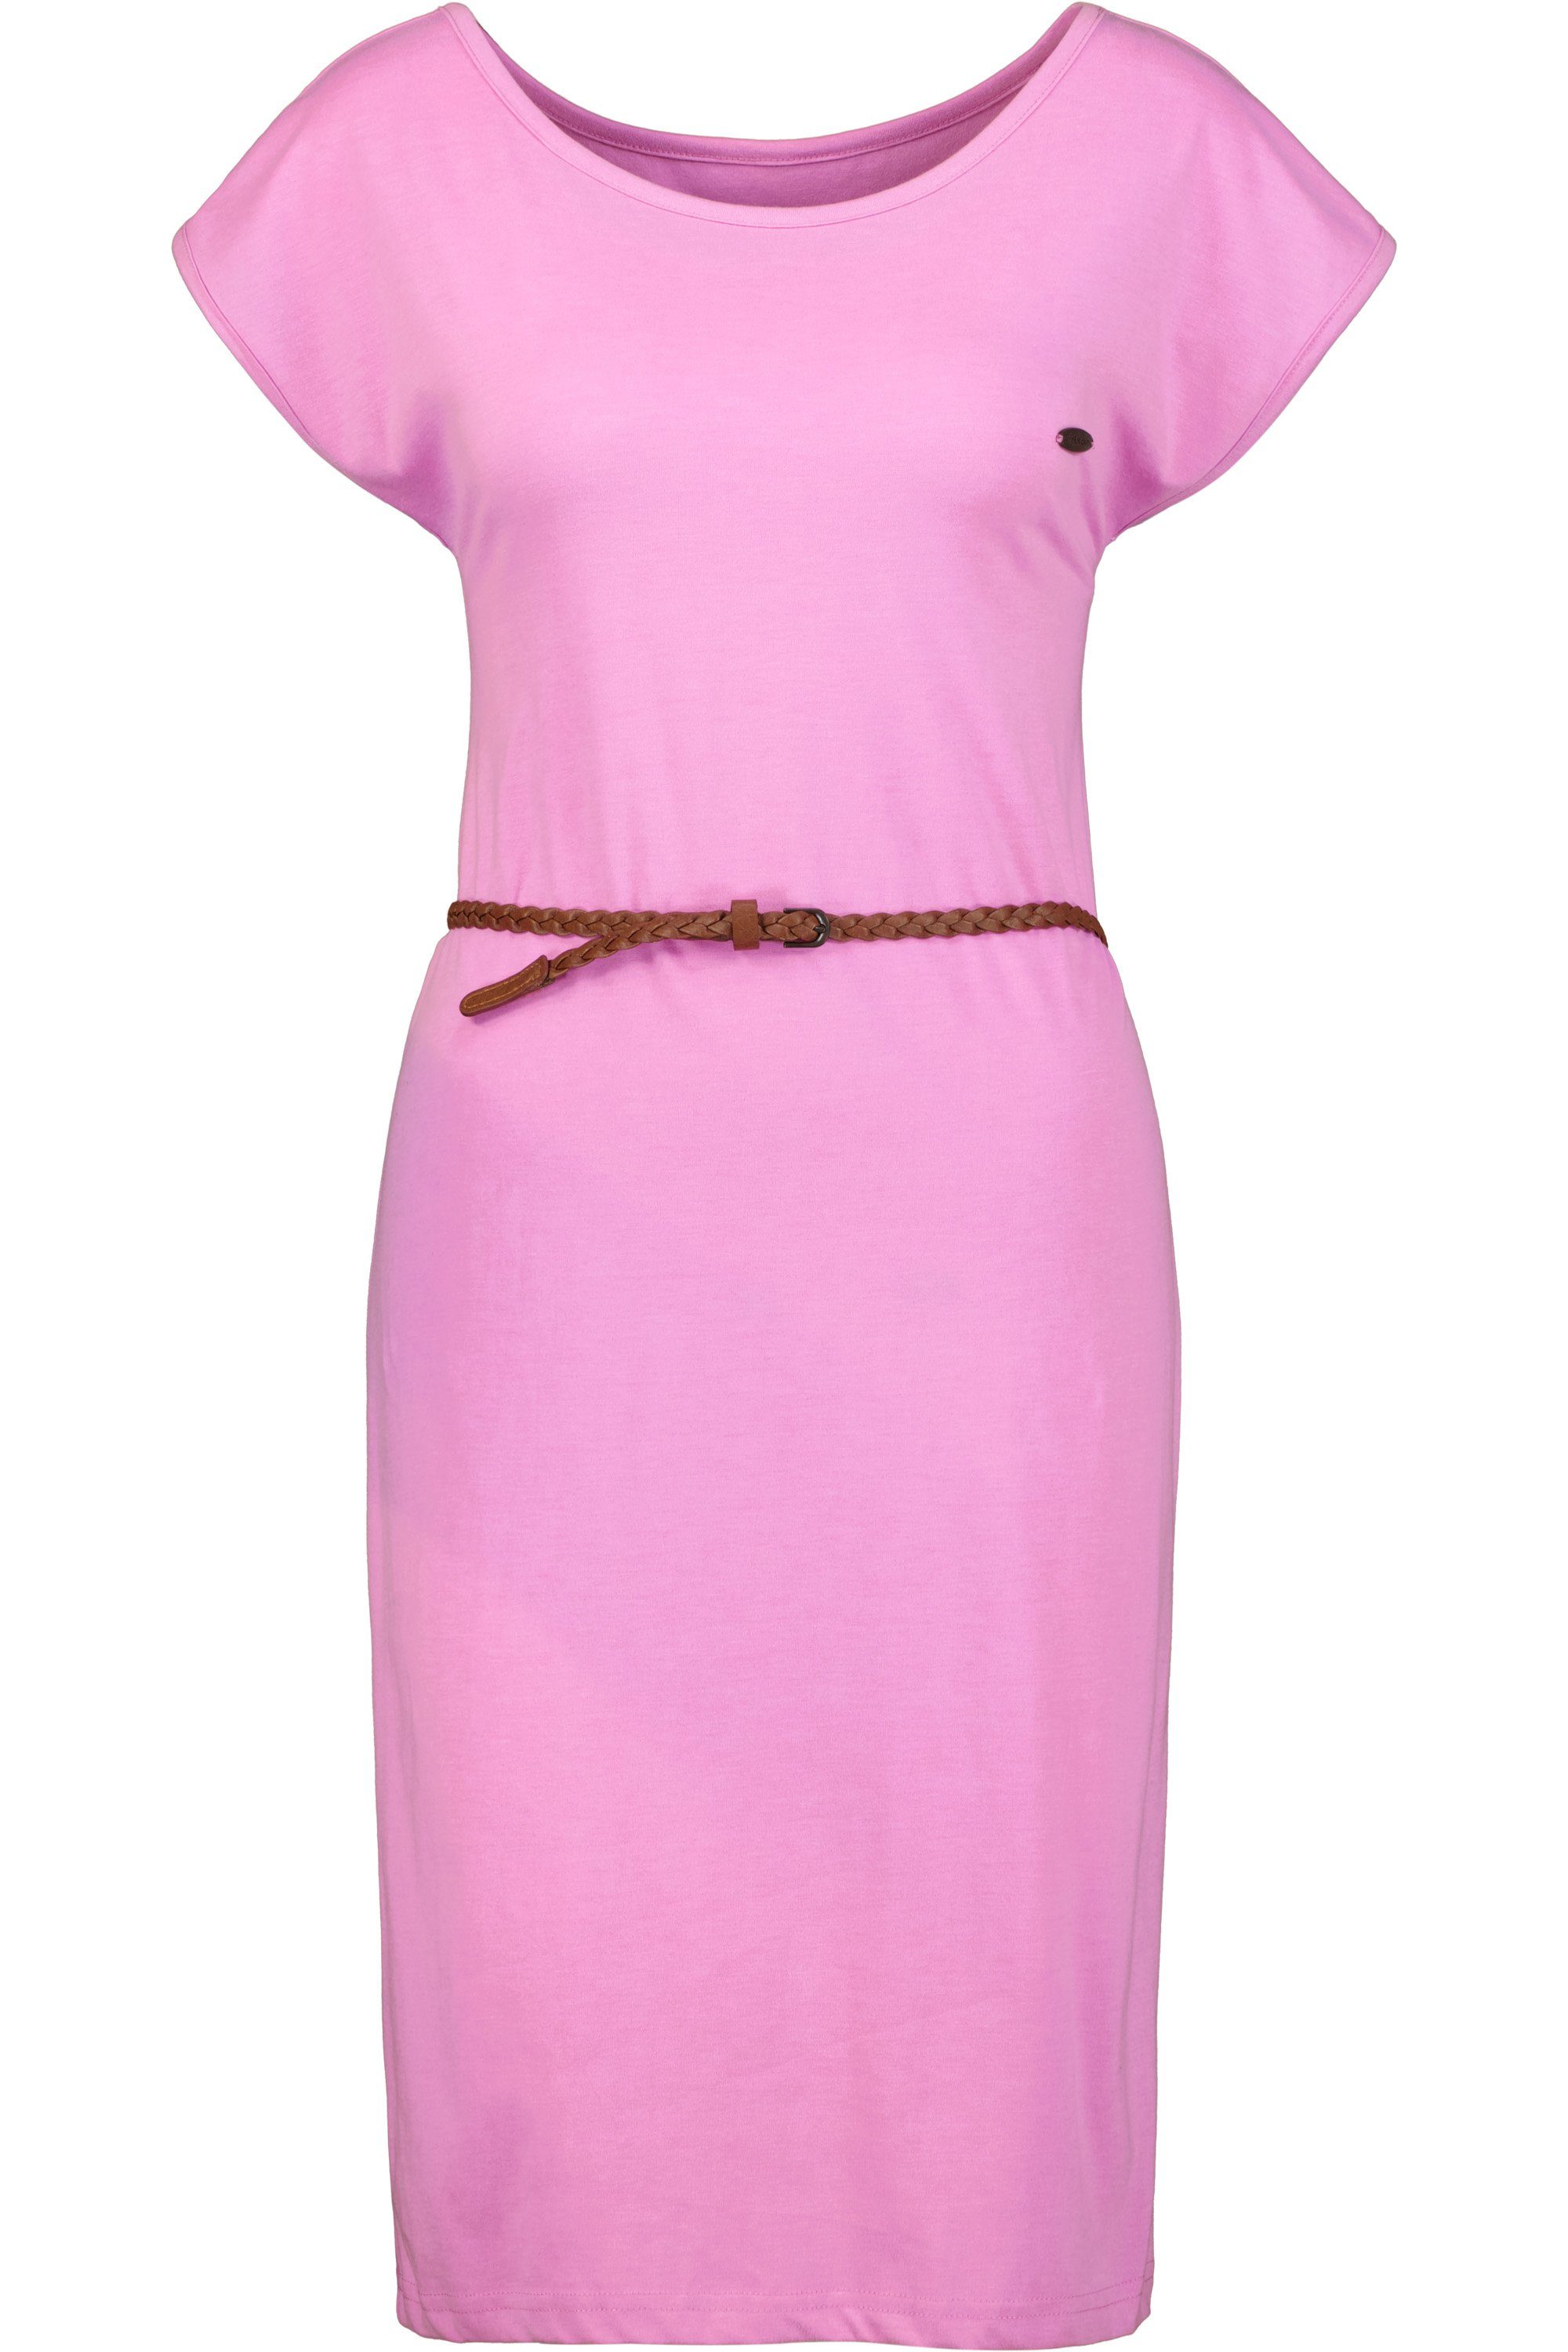 Alife & Damen Dress ElliAK bubblegum melange A Kleid Kickin Shirt Sommerkleid Sommerkleid